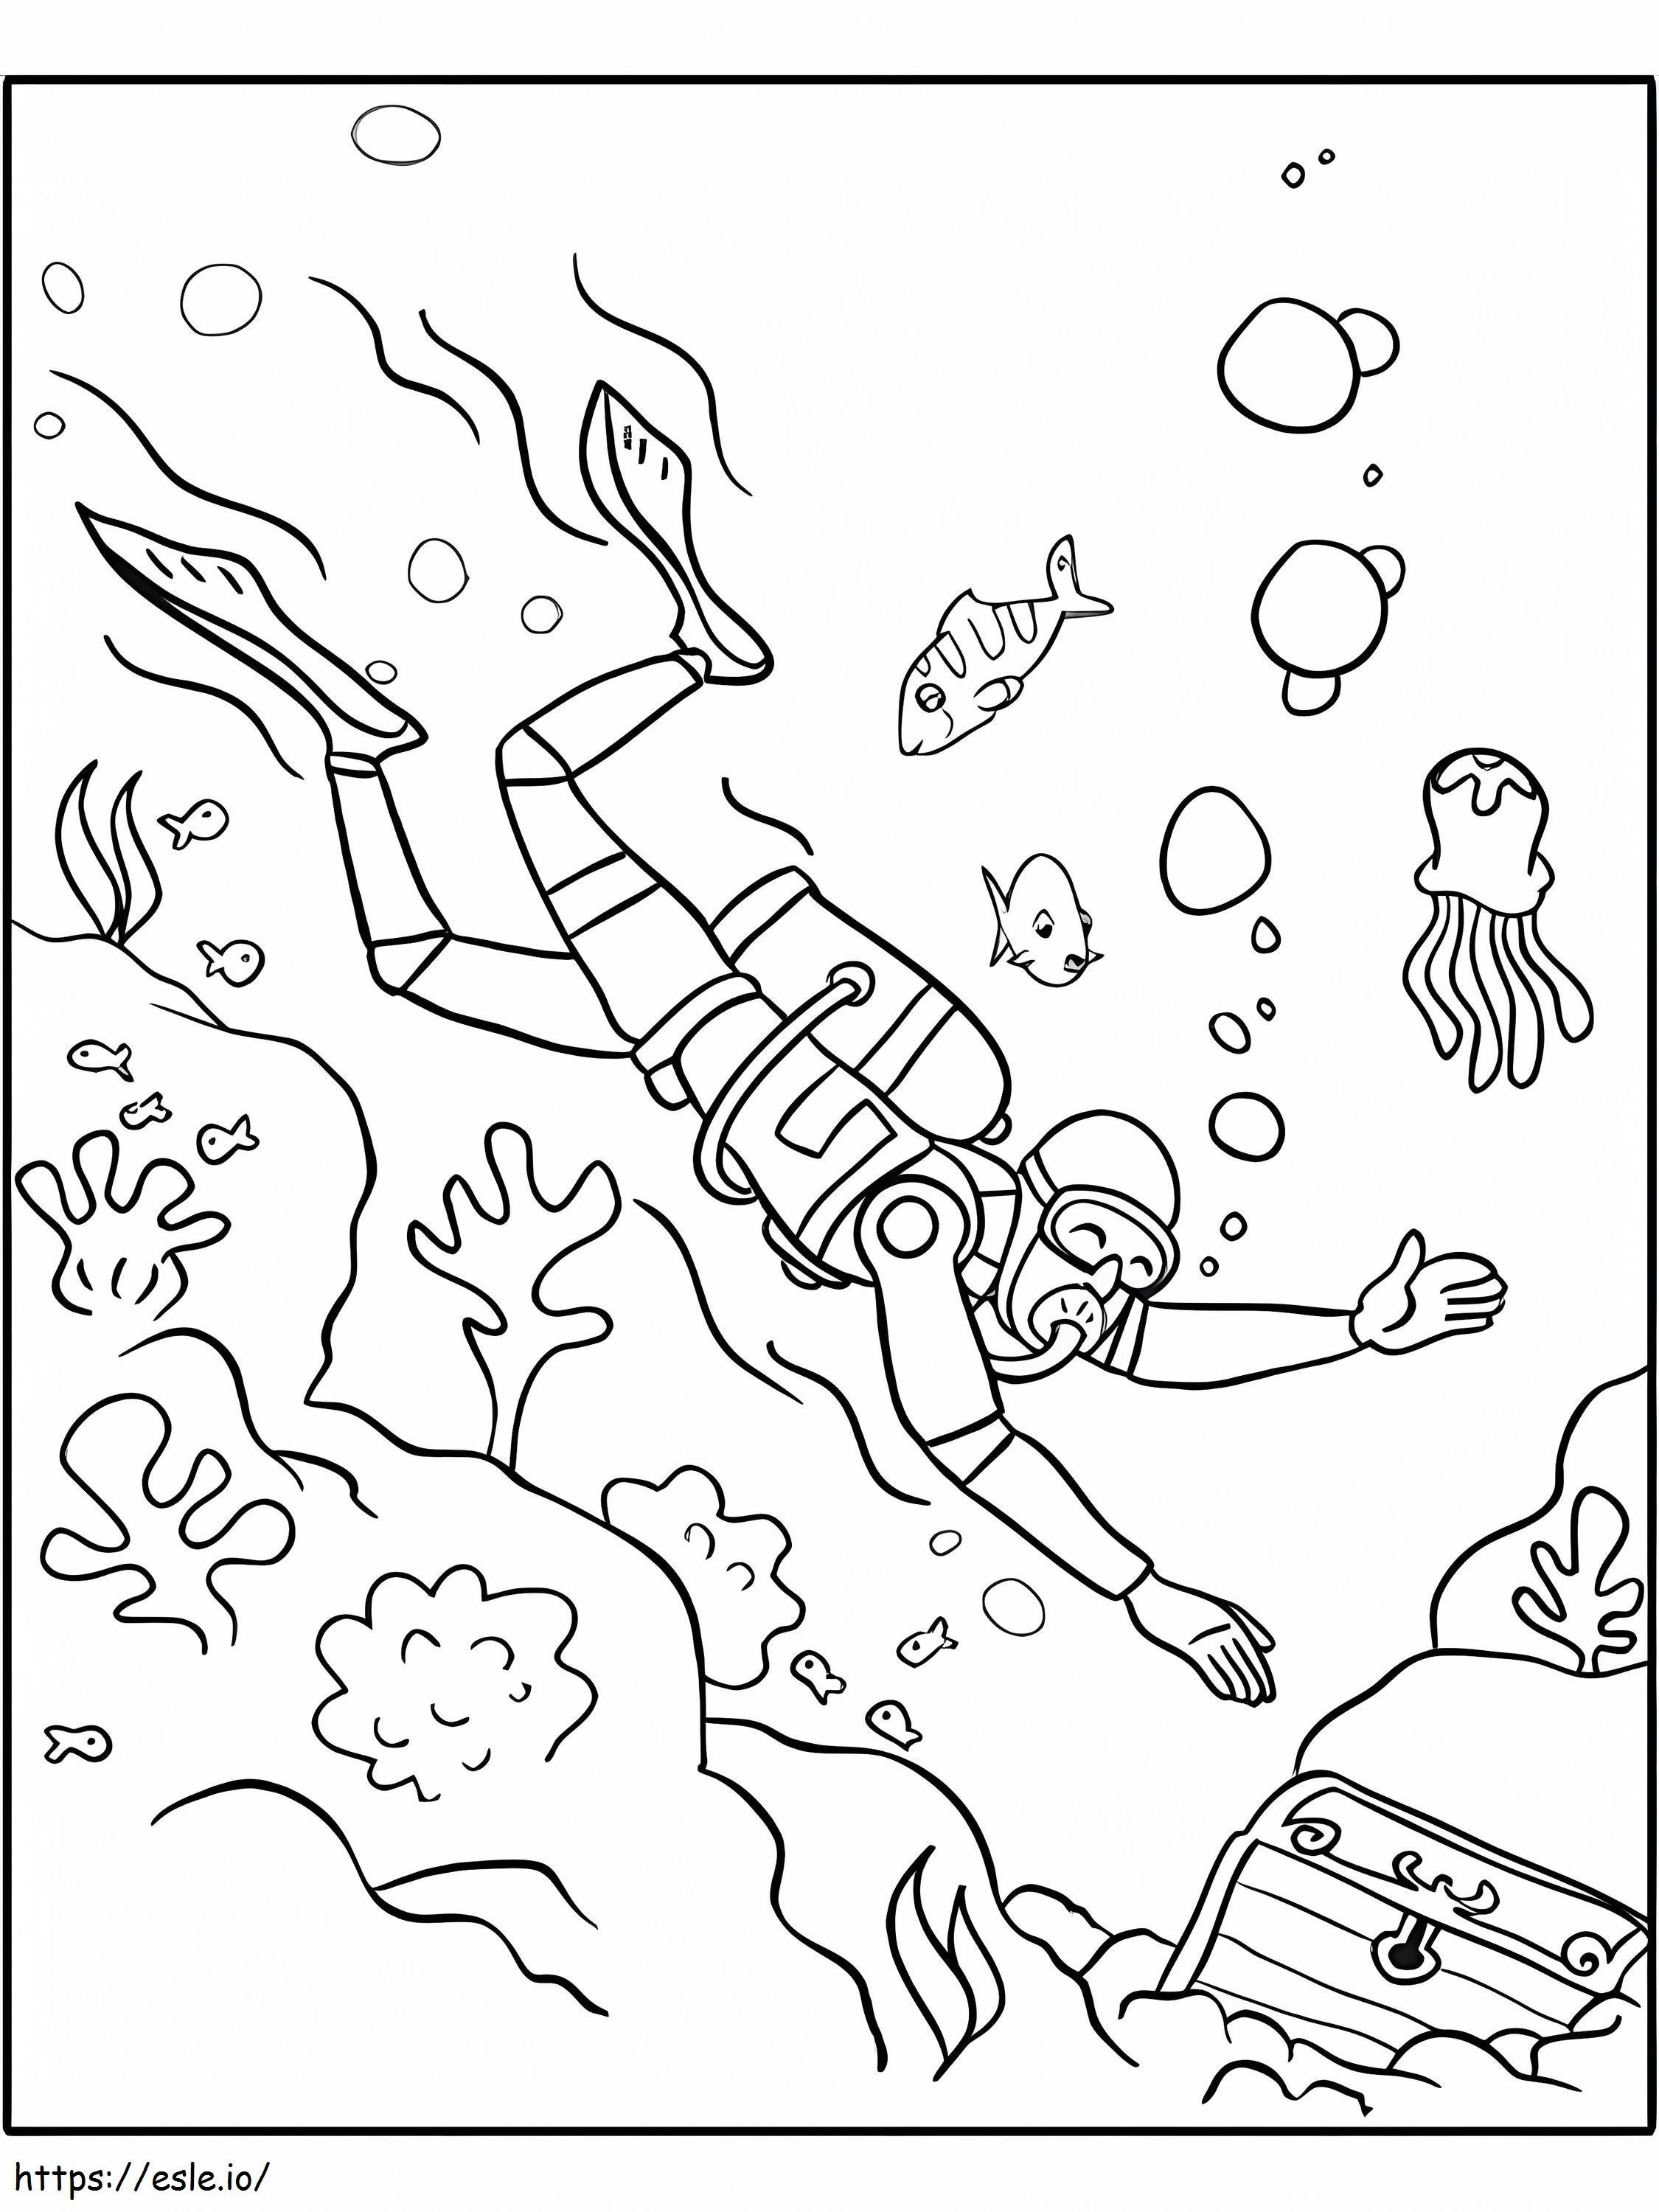 Happy Scuba Diver coloring page